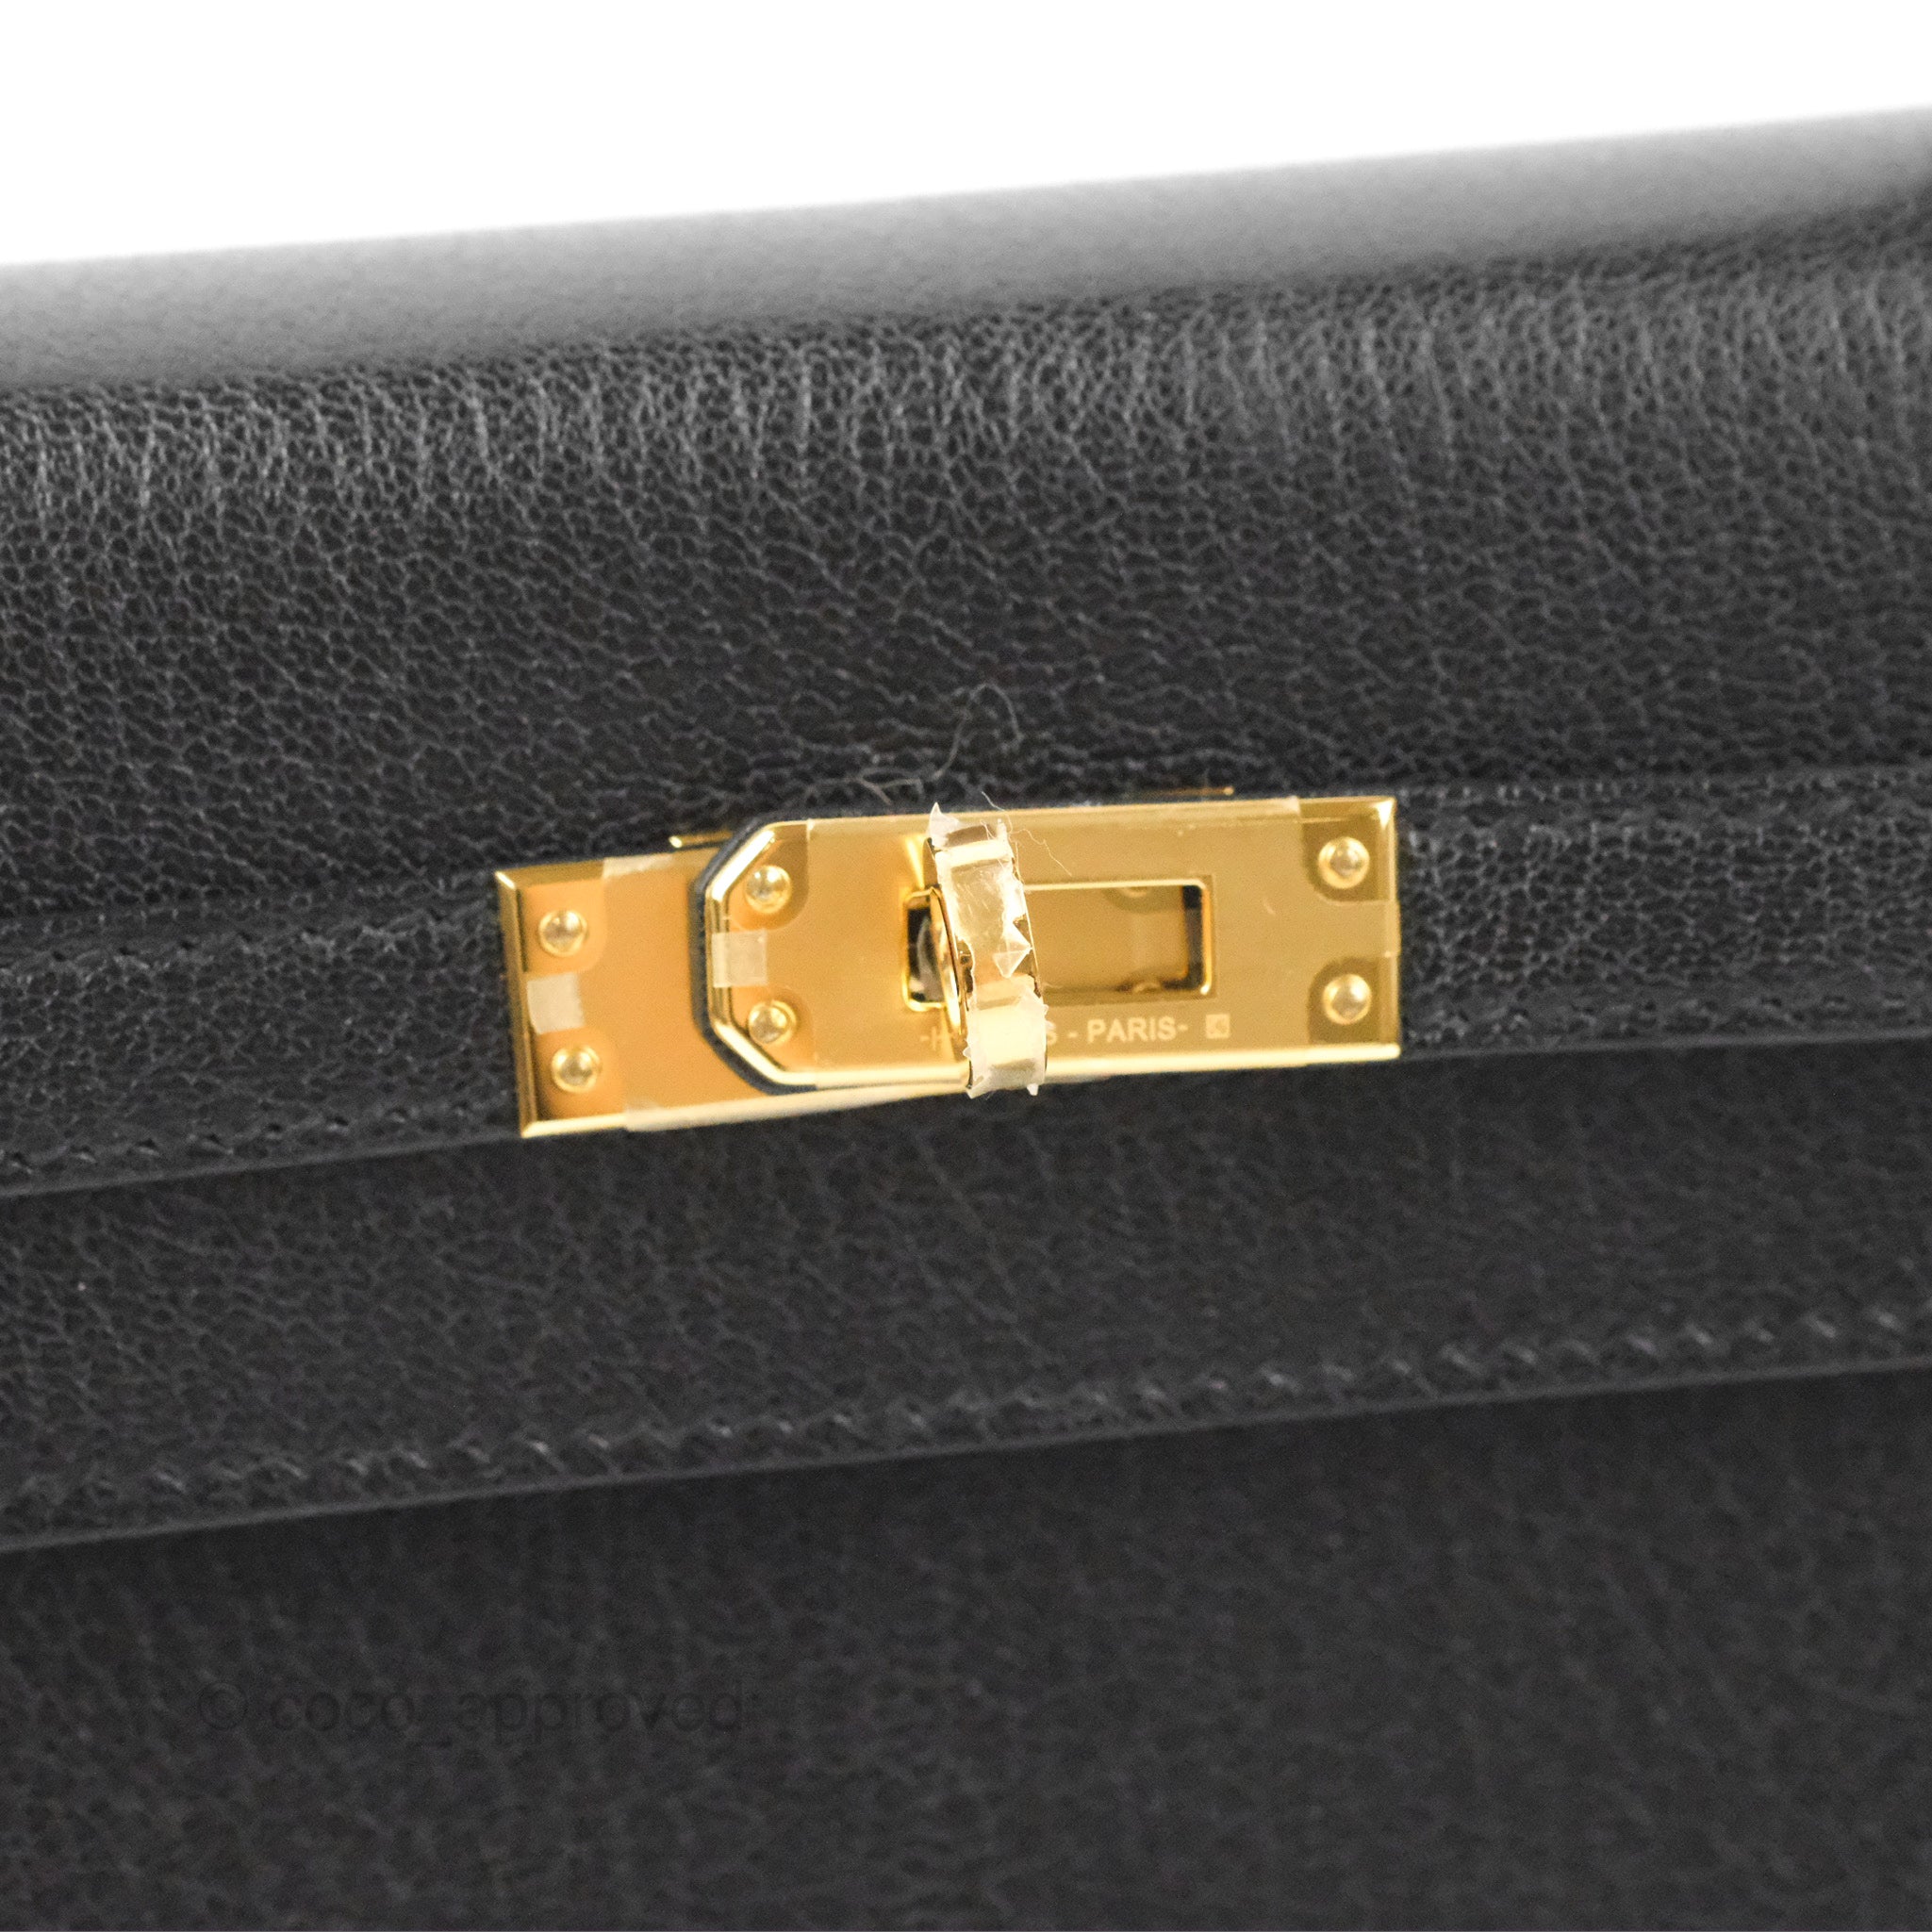 Hermes Kelly Sellier 25 Black Chevre Chamkila Gold Hardware – Coco Approved  Studio